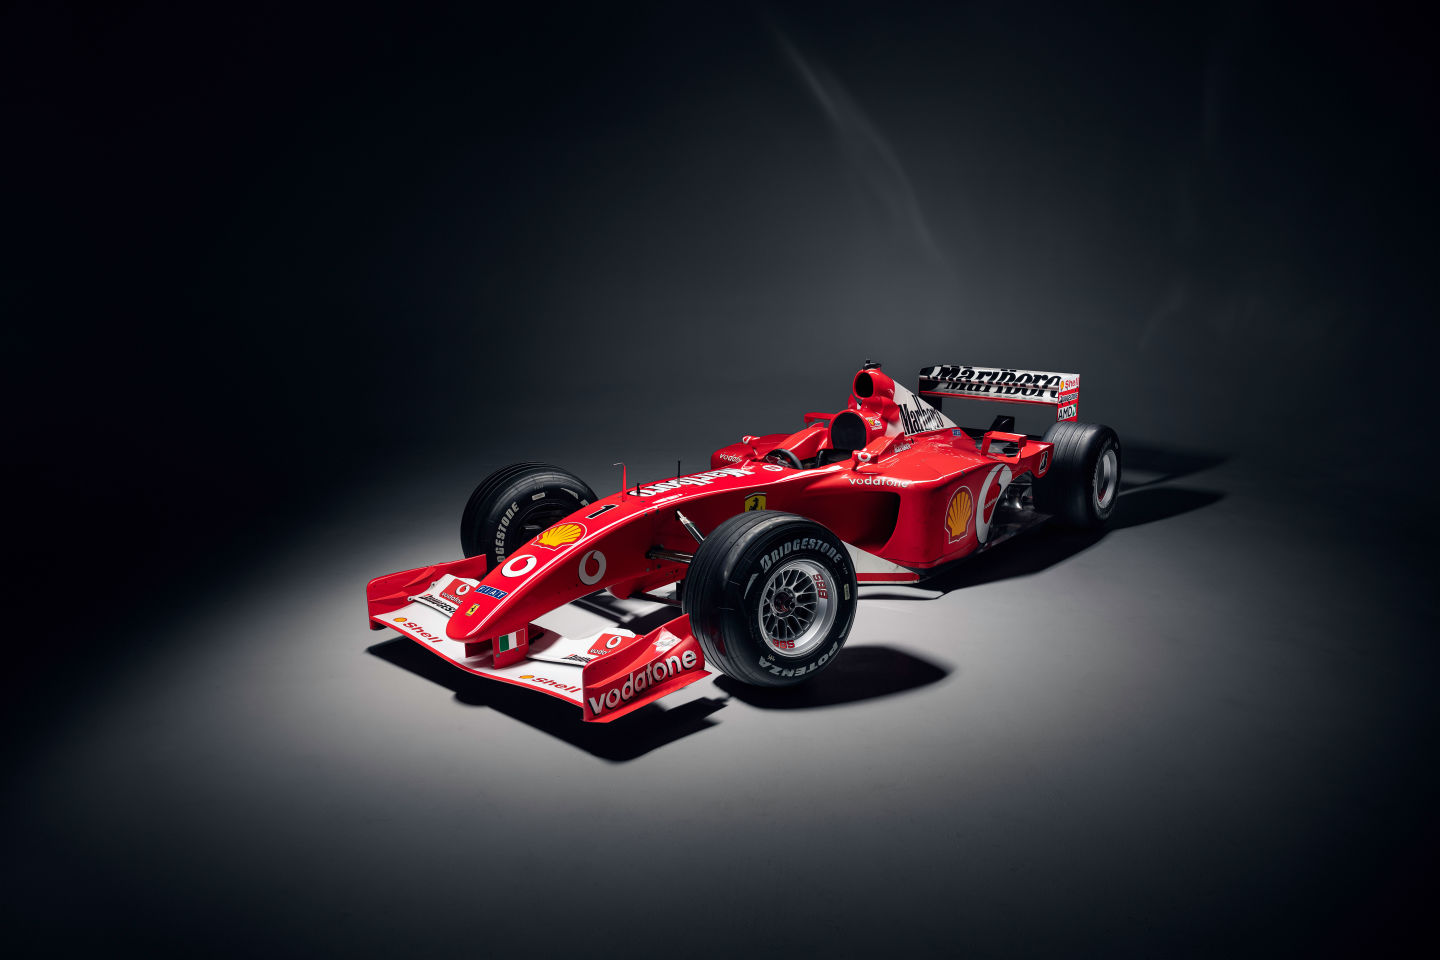 230728 2002 Ferrari F2001b was raced by Schumacher [3]